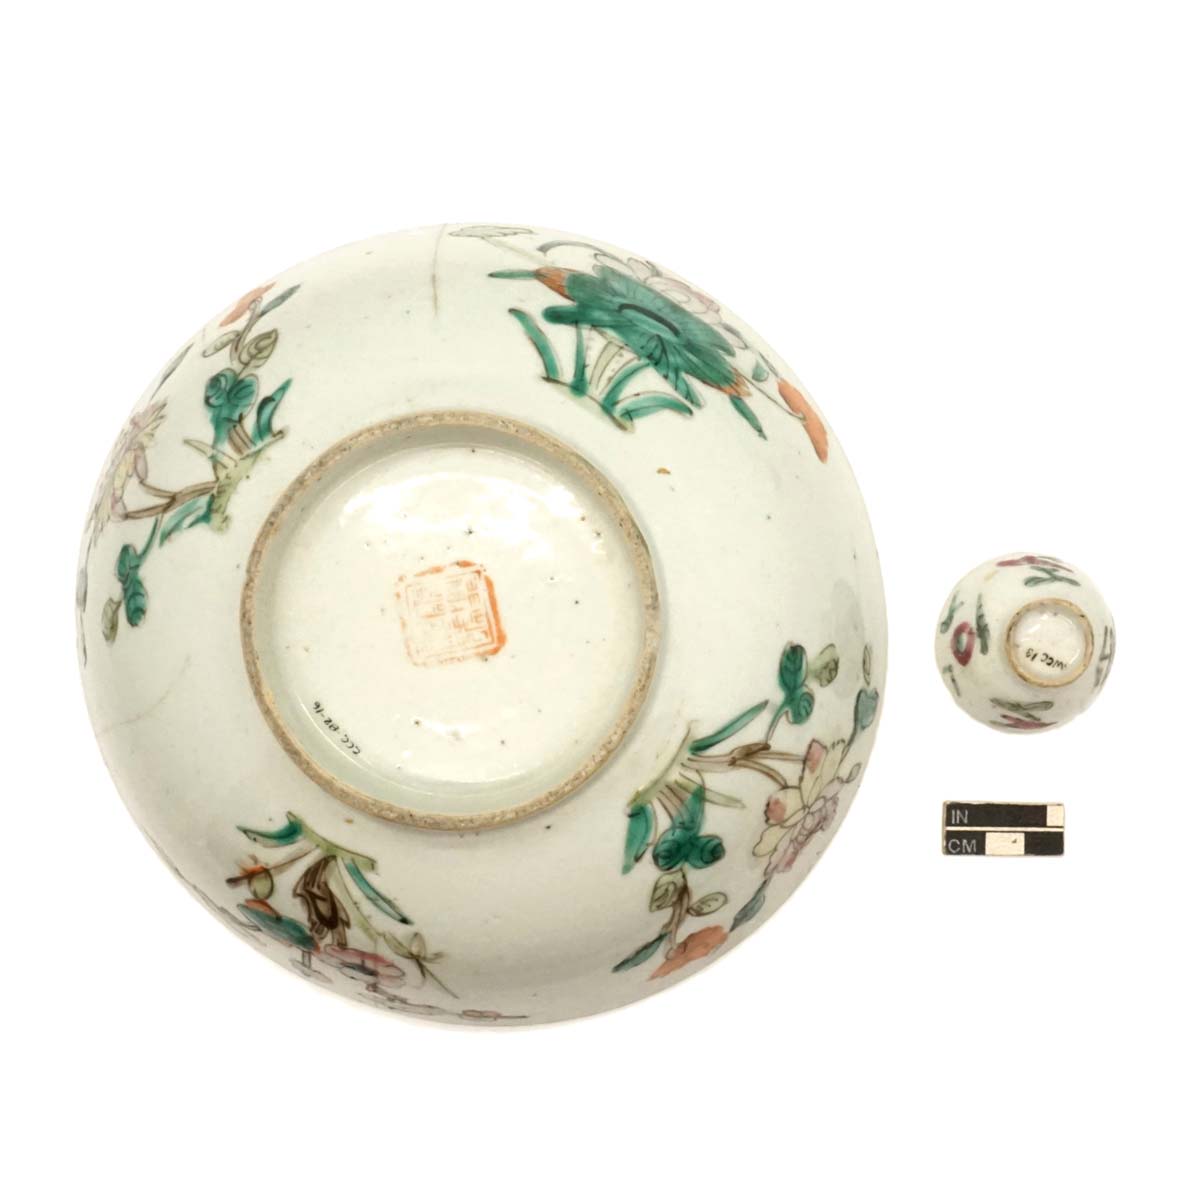 Serving bowl and liquor cup, “Four Seasons Flowers” pattern, porcelain.